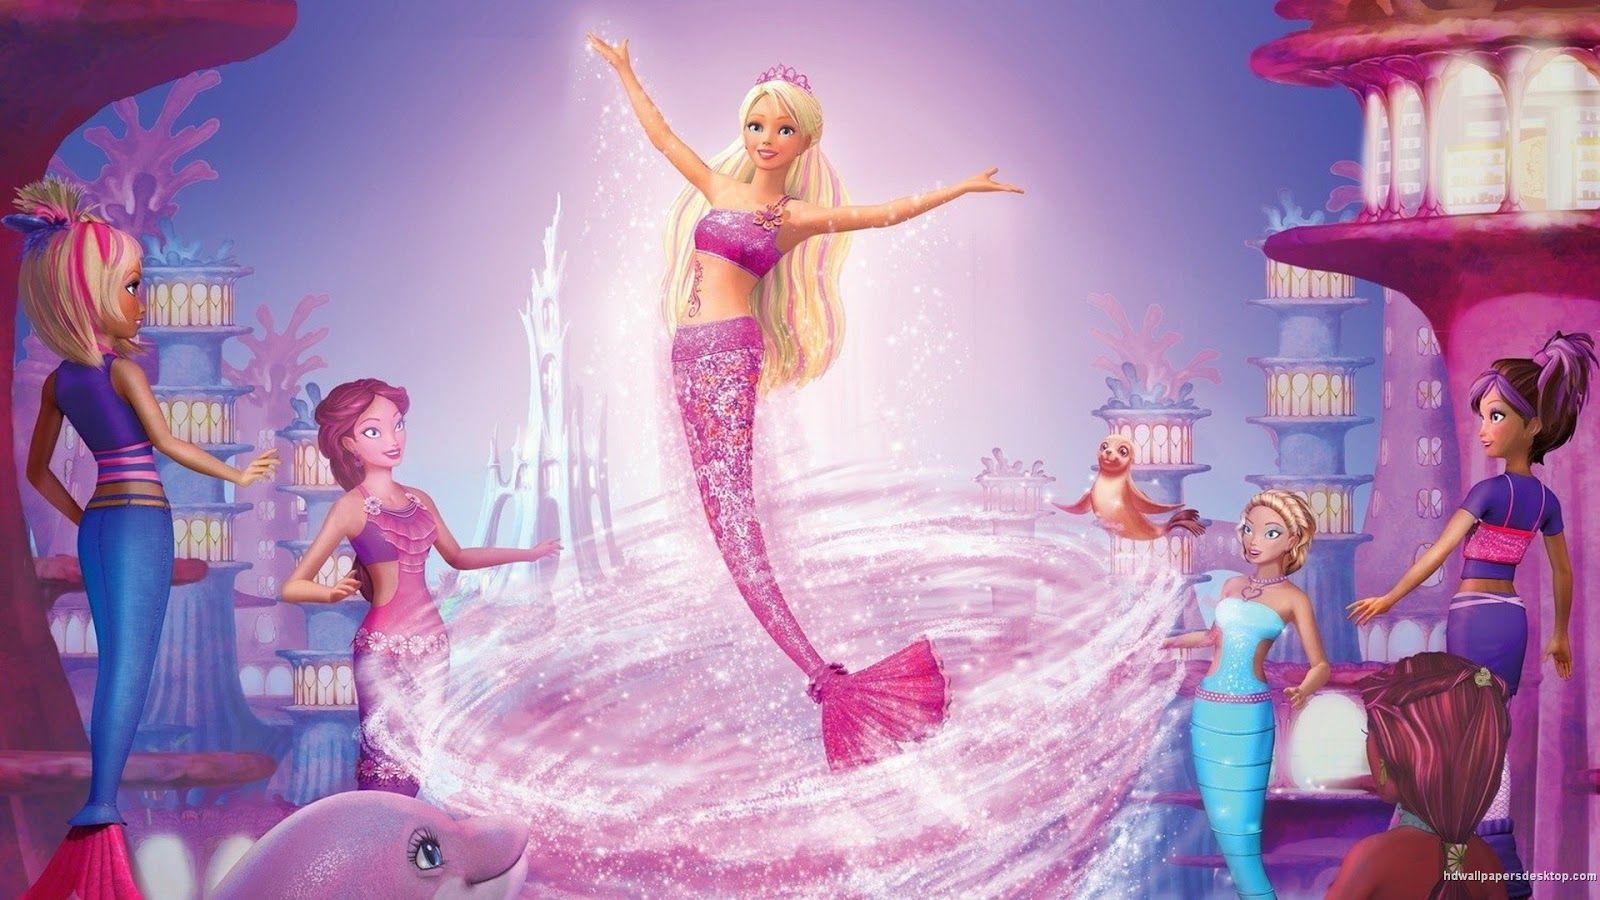 Barbie Wallpaper Free Download. (39++ Wallpaper)